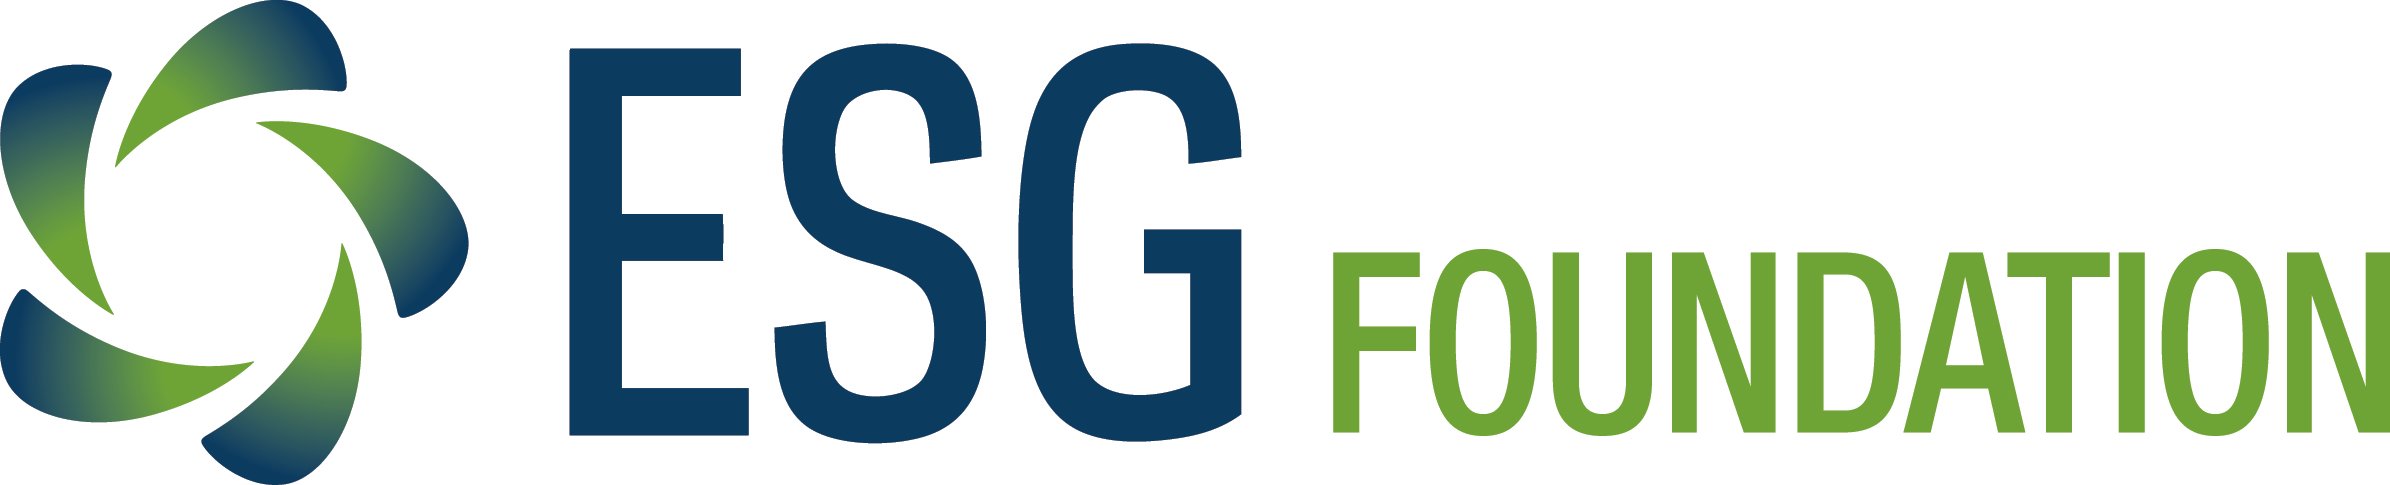 ESG Foundation Logo.jpg